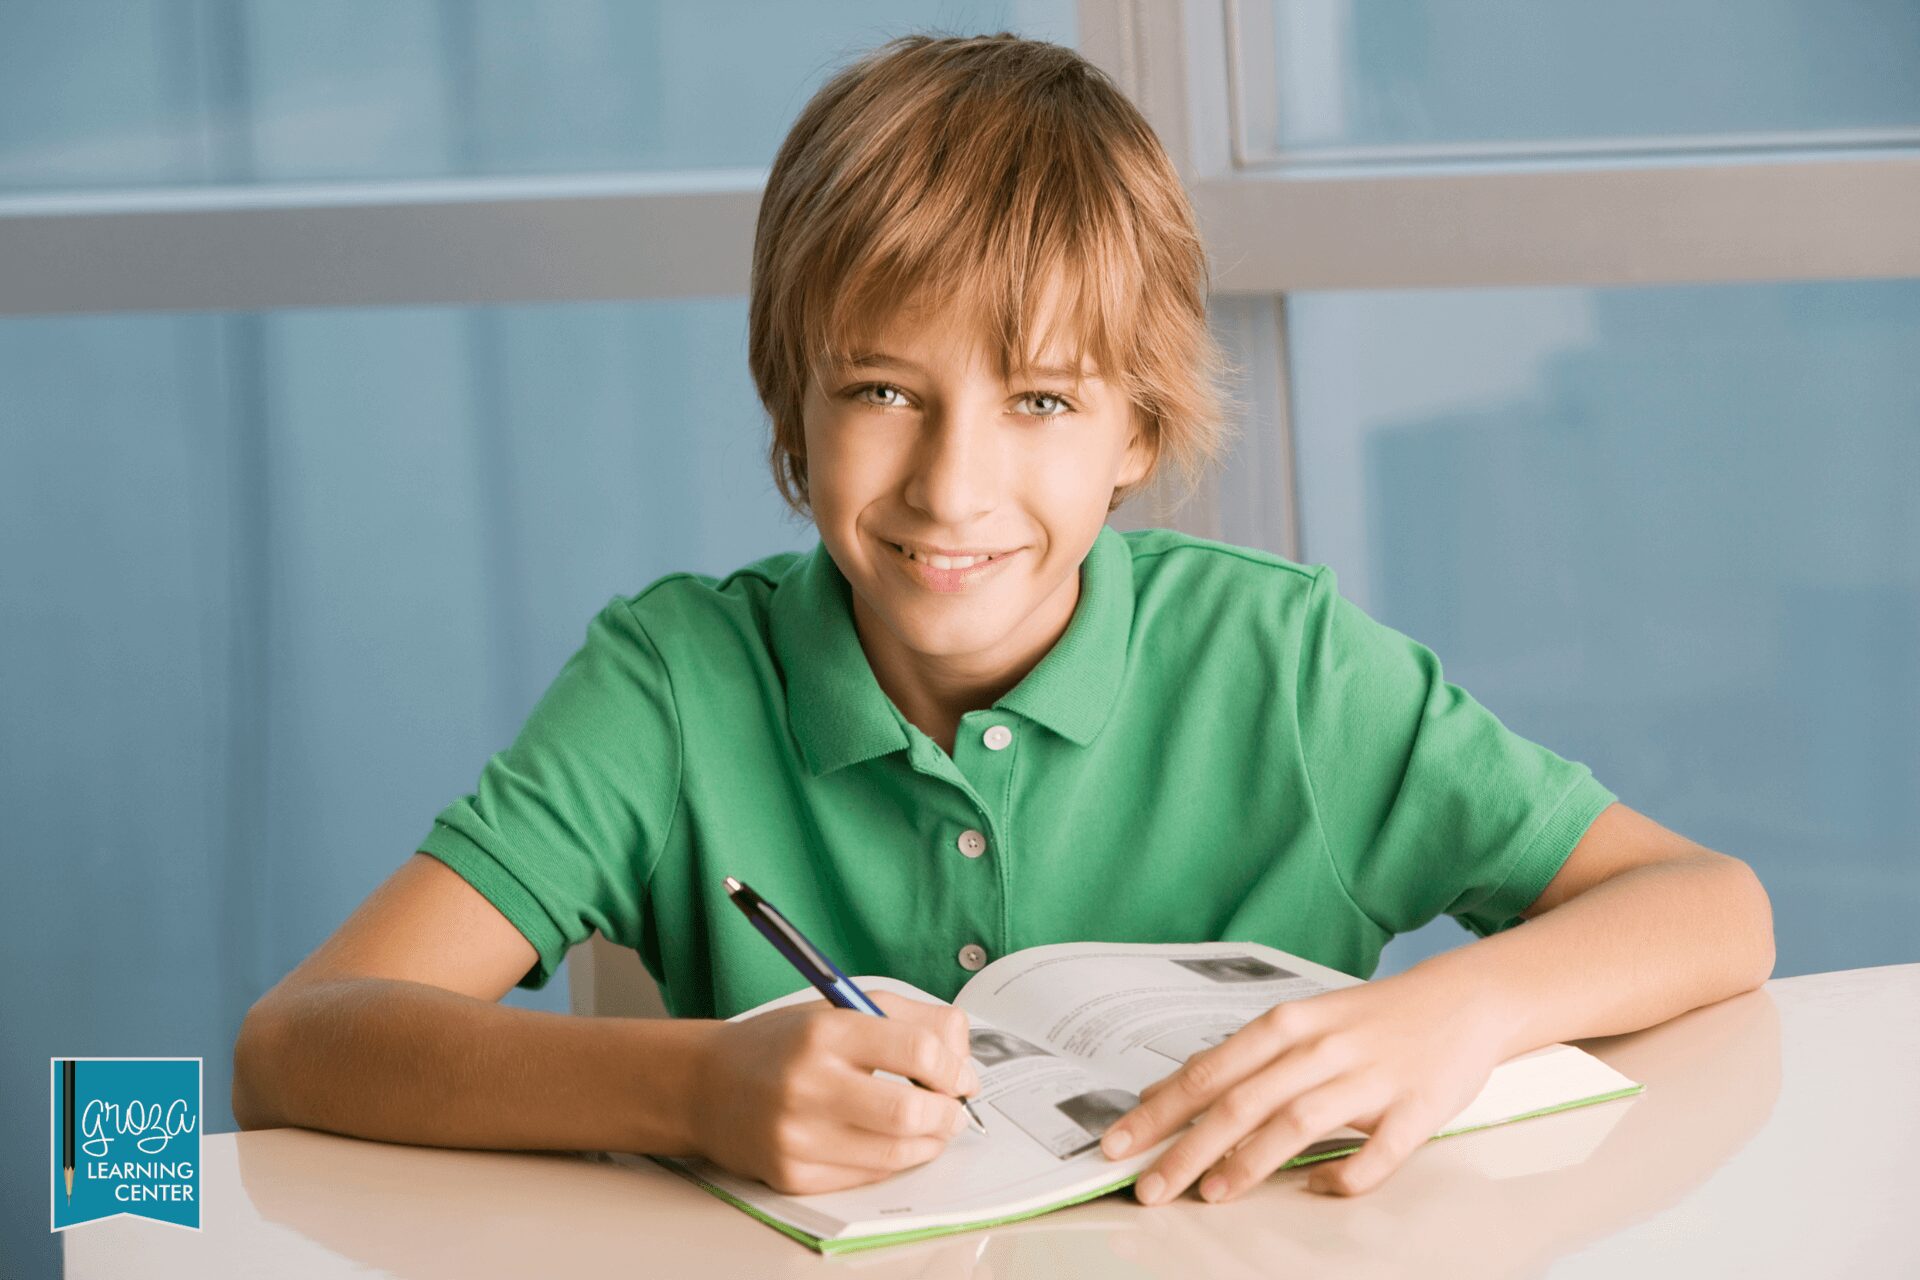 grozalearningcenter psat test teen boy writing